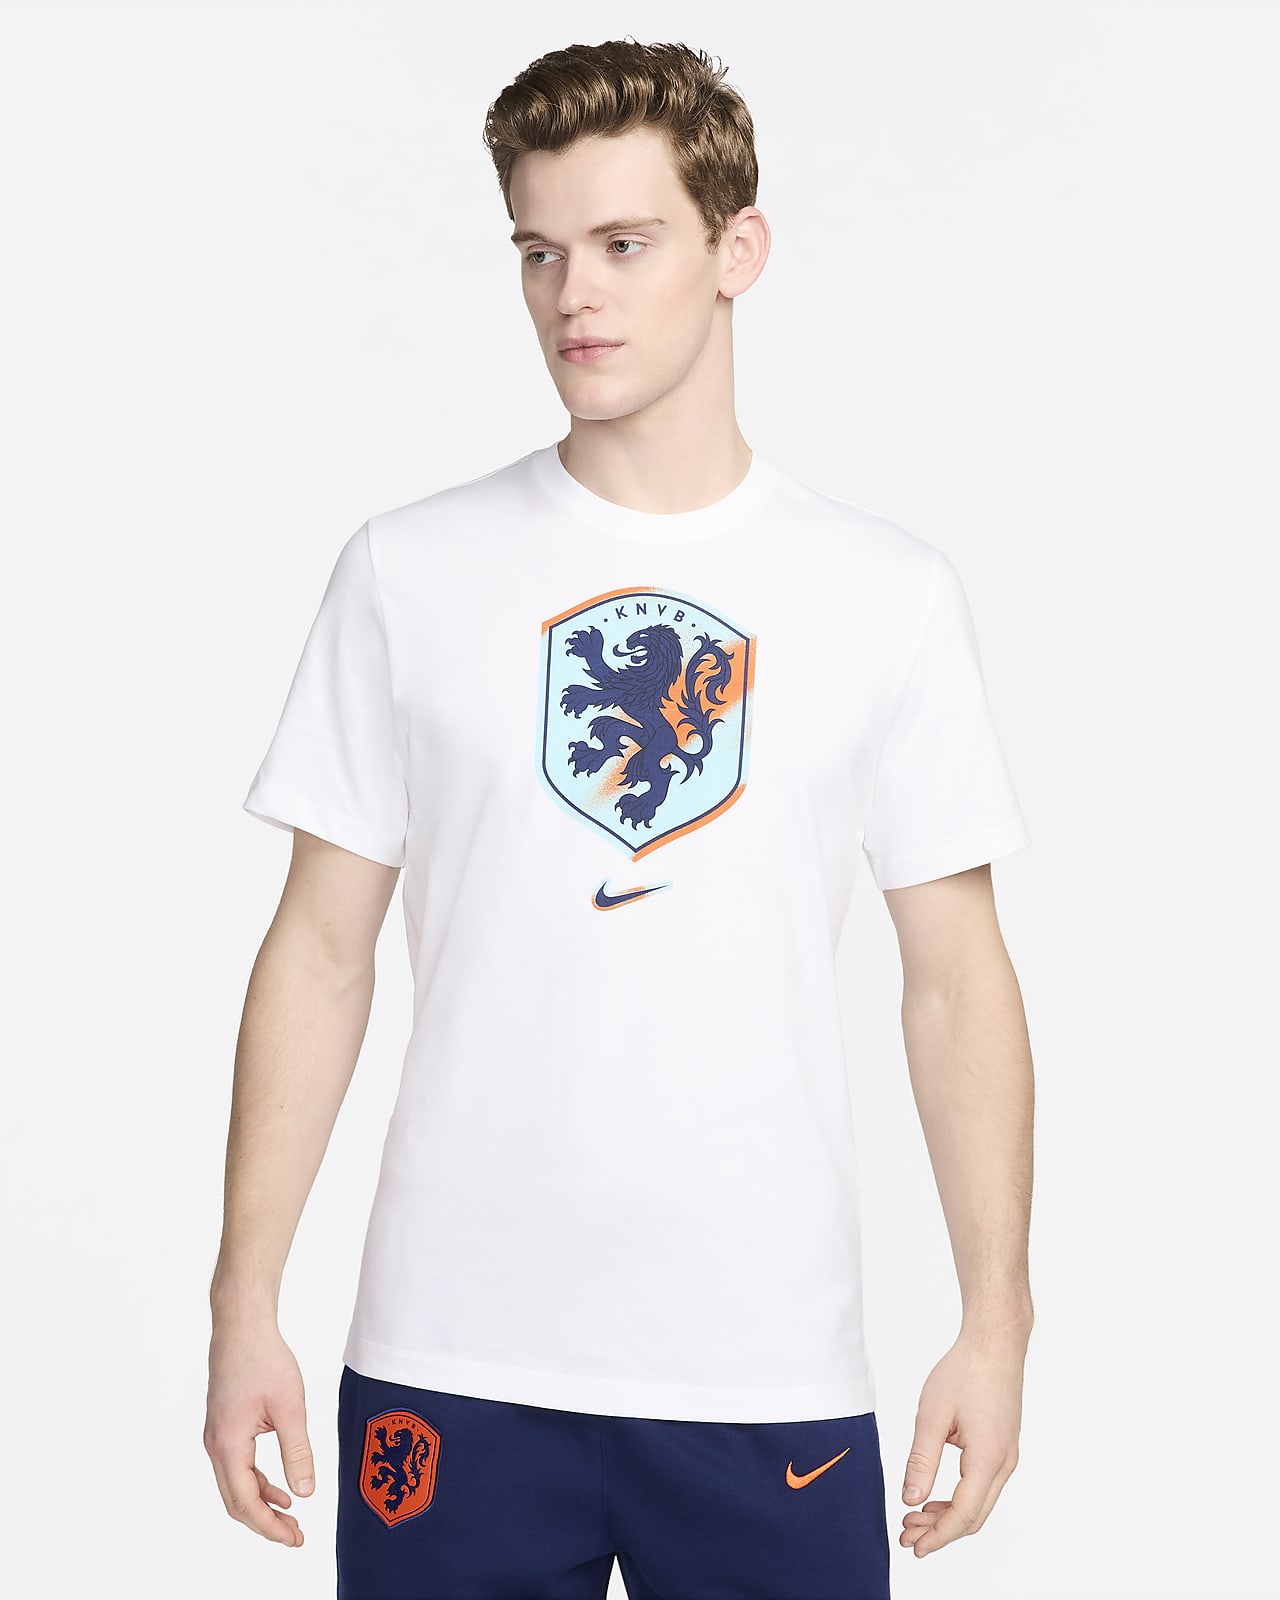 Hollandia Nike Soccer férfipóló